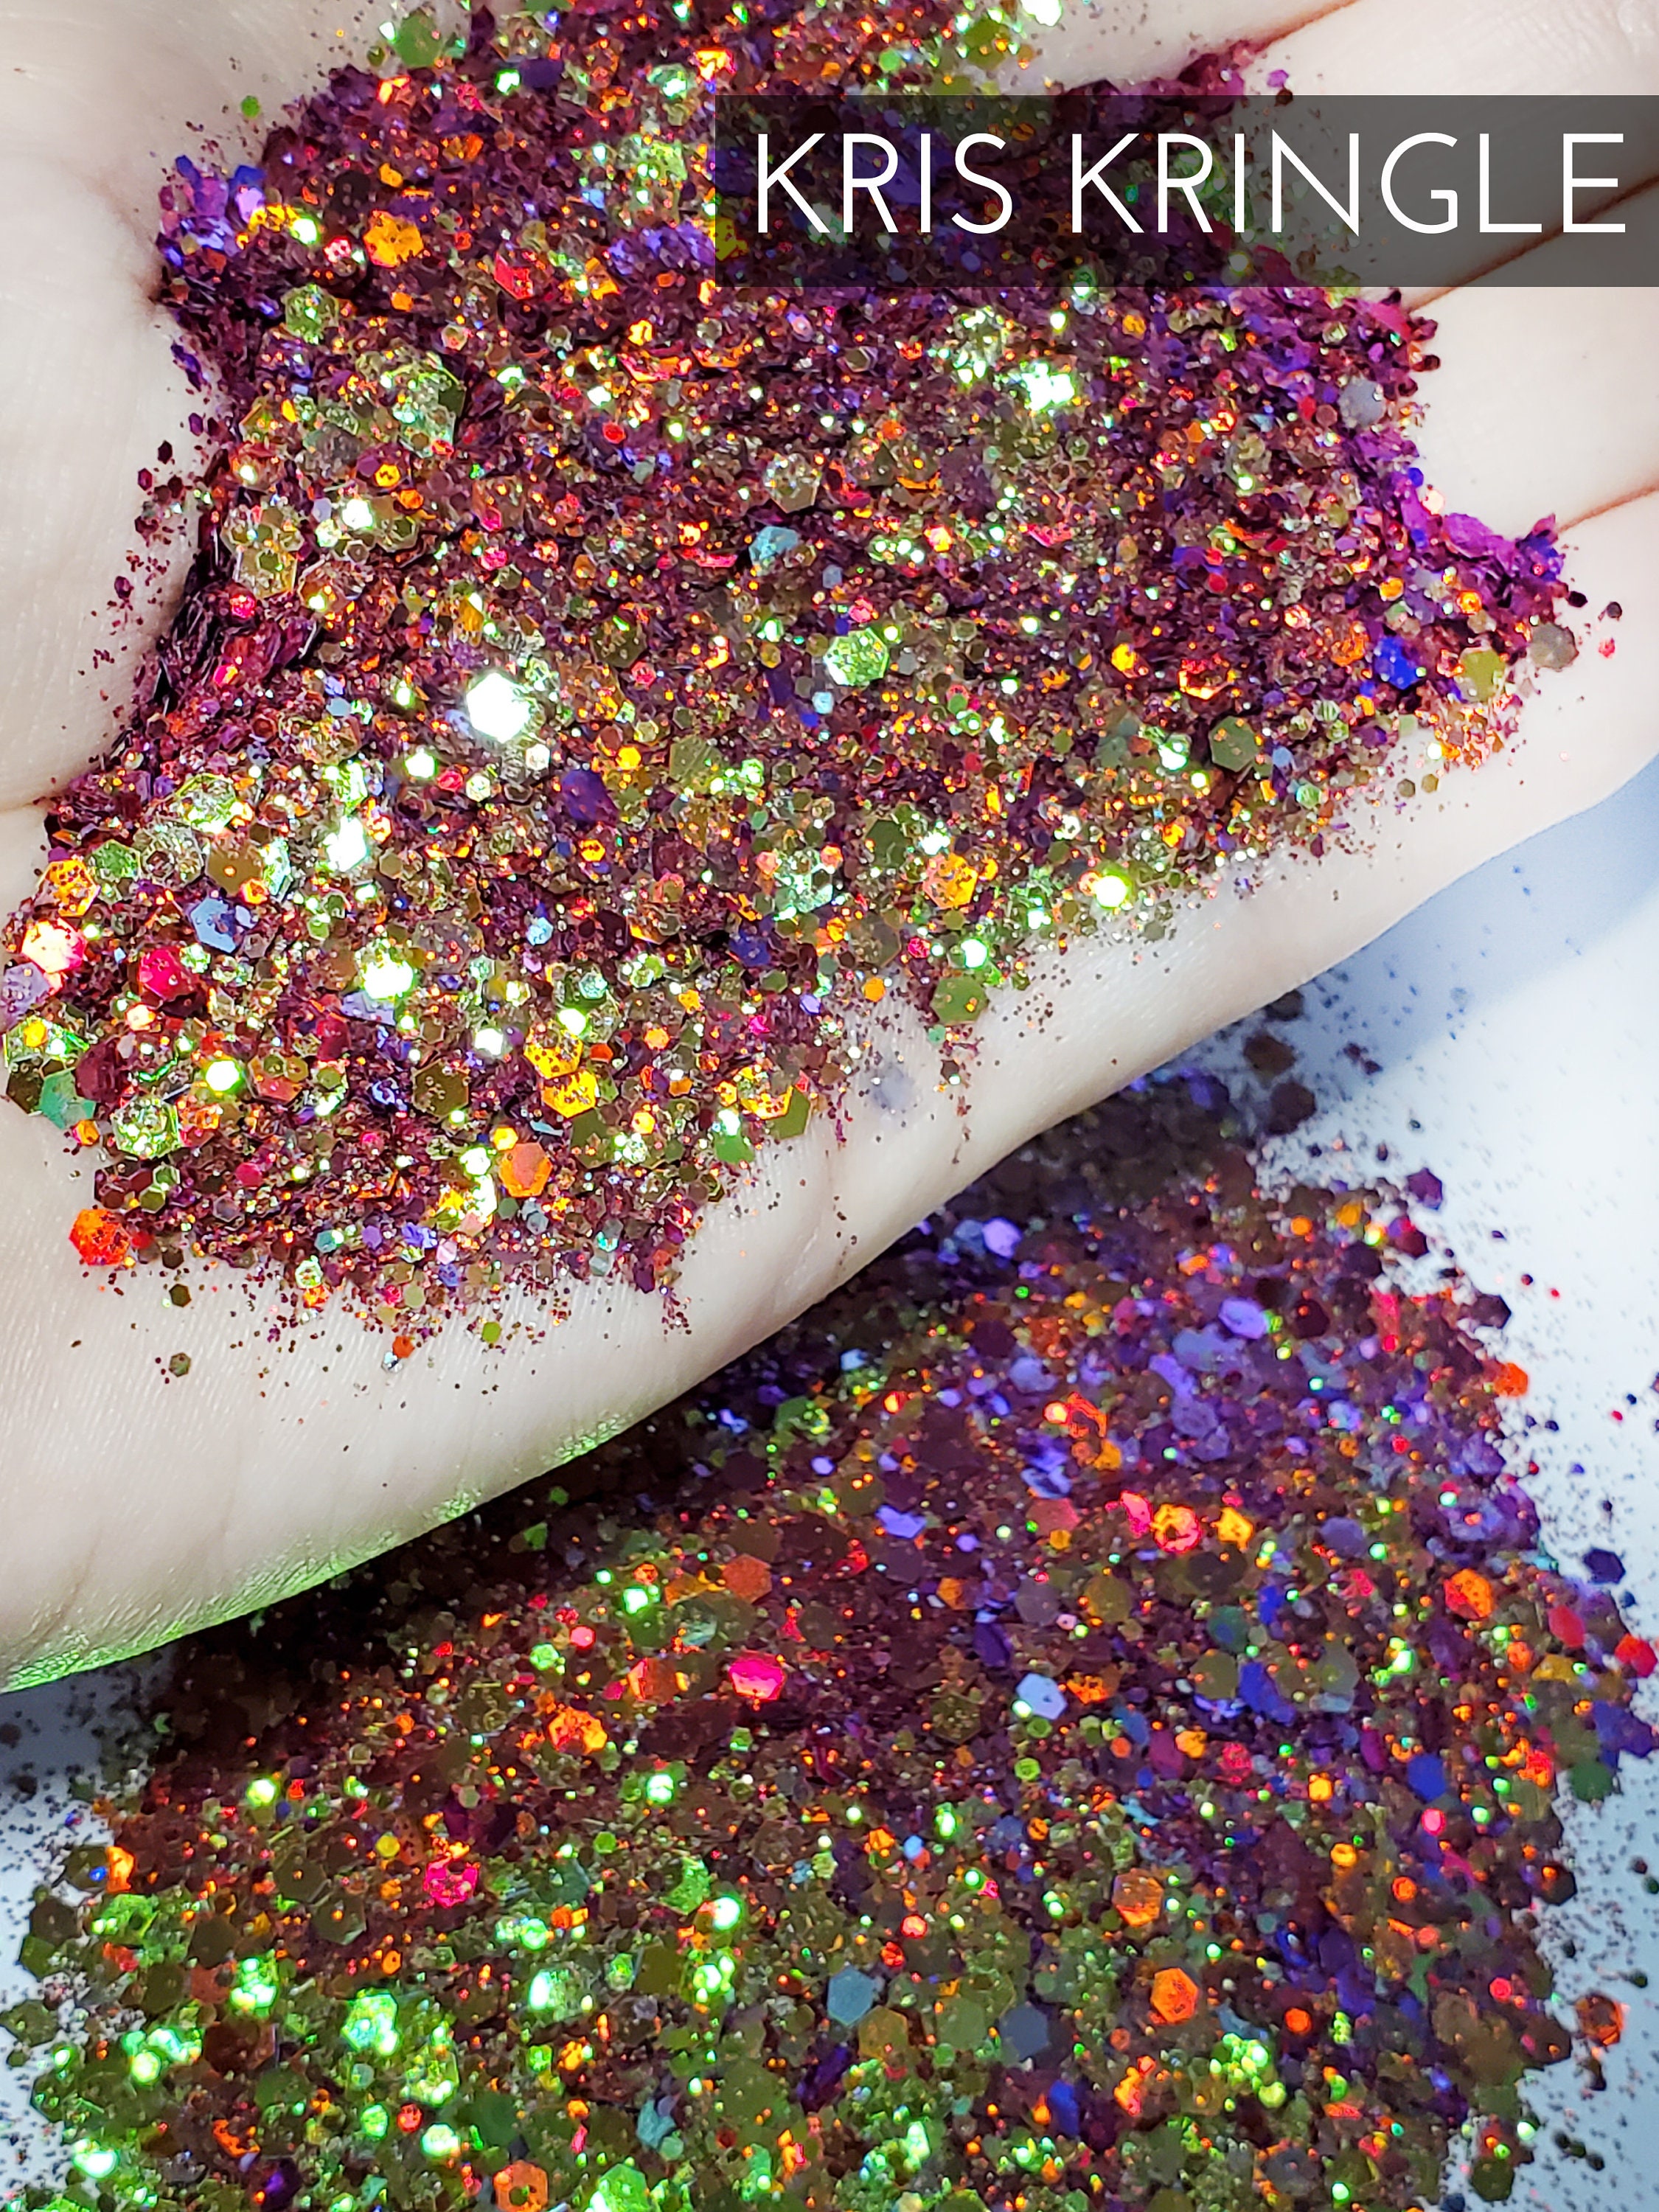 Cotton Candy .040 iridescent glitter, tumbler making glitter